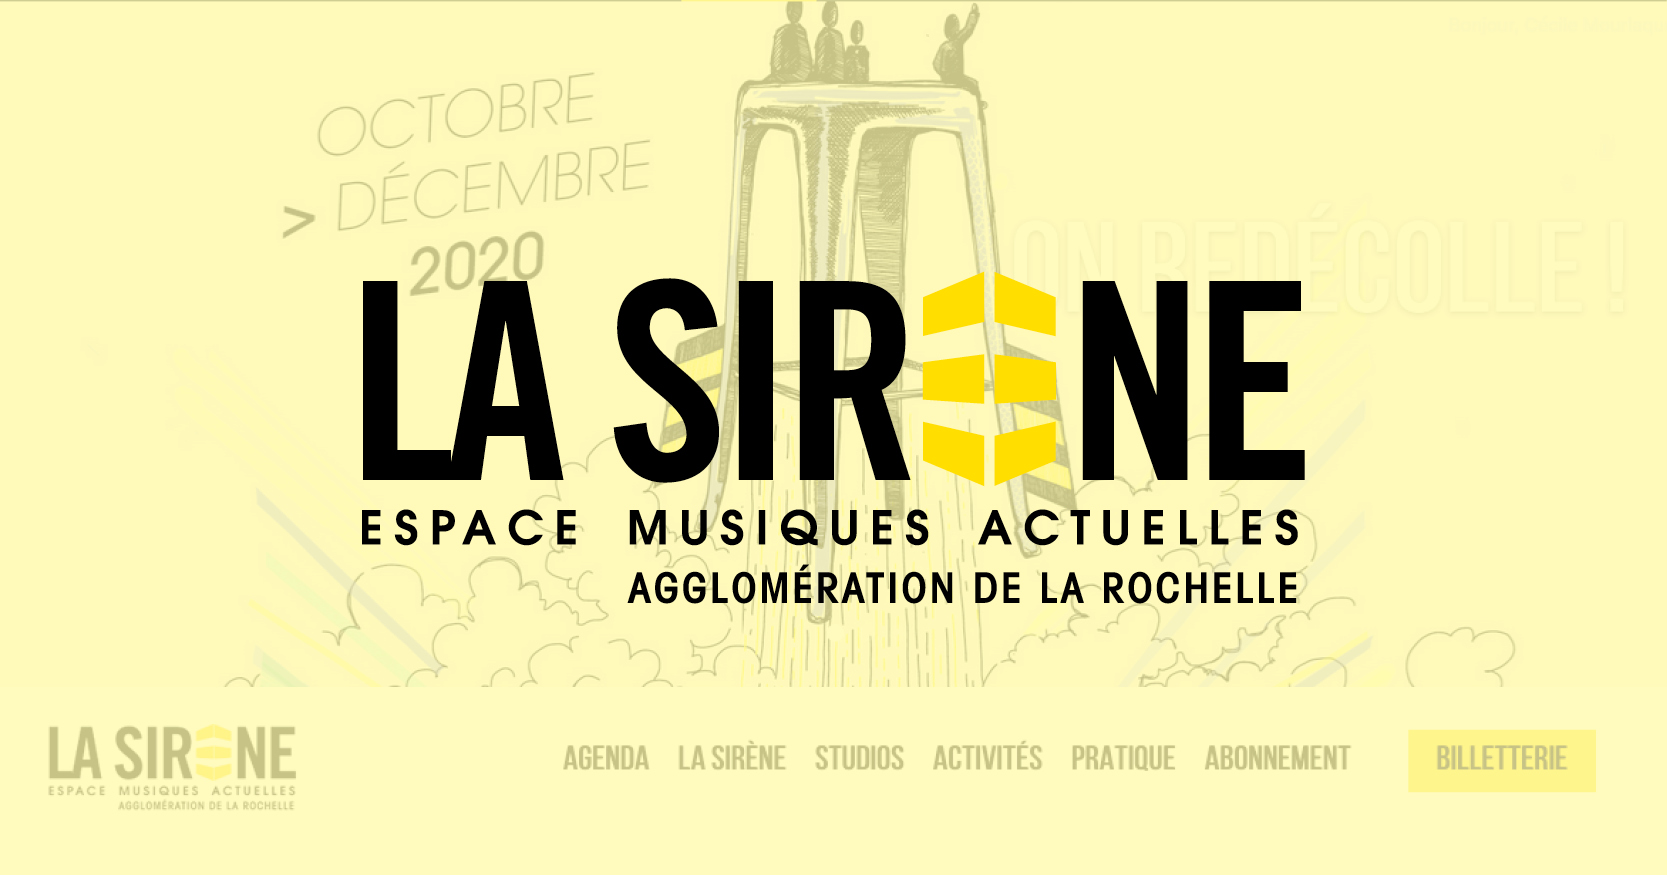 (c) La-sirene.fr